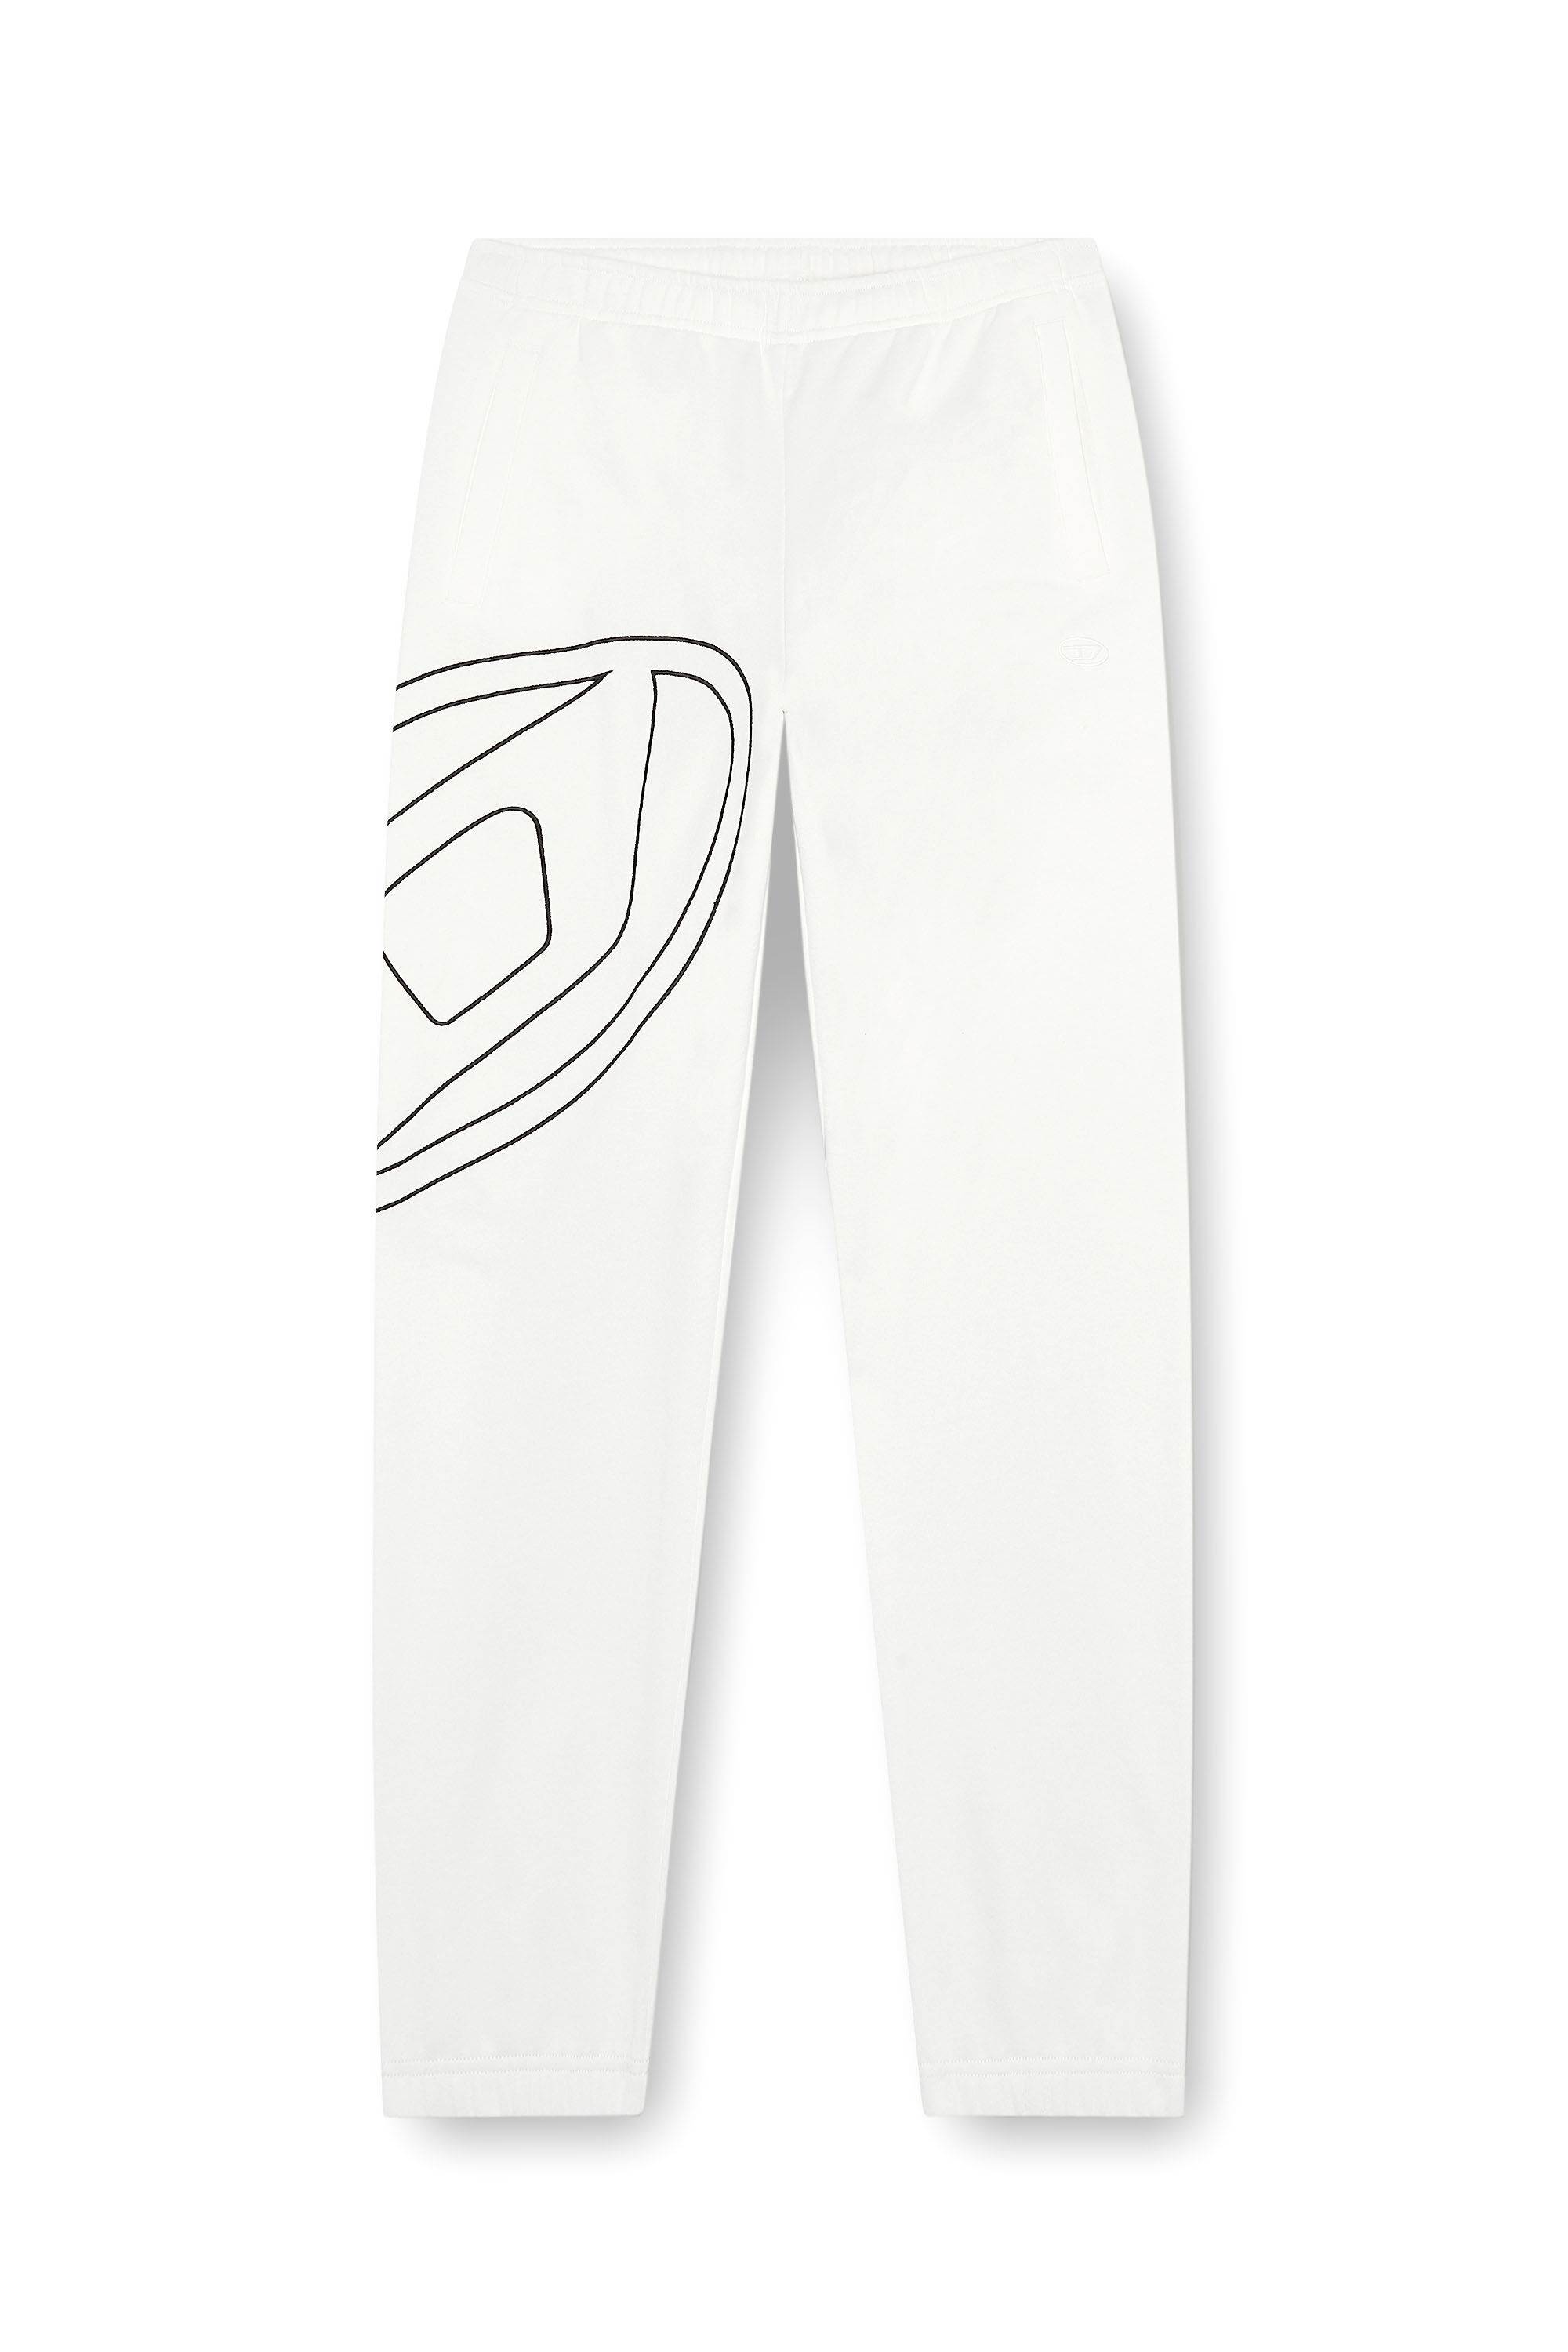 Diesel - P-MARKY-MEGOVAL-D, Hombre Pantalones deportivos con oval D extragrande in Blanco - Image 2